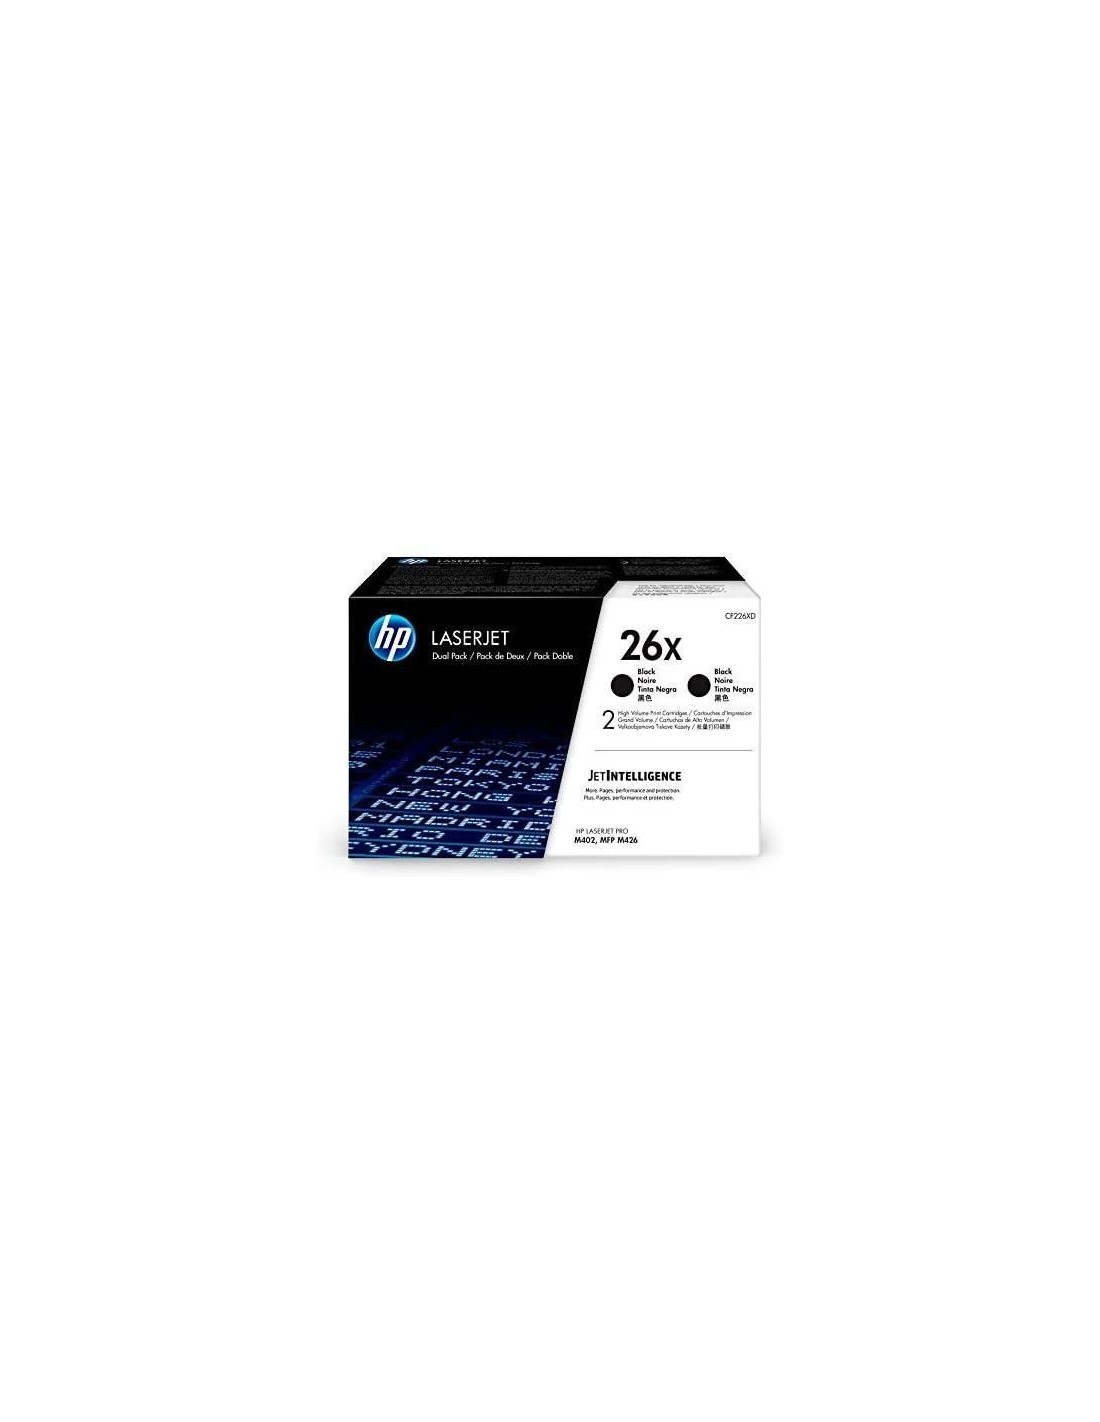 HP LaserJet Pro M402/426 Pack 2 Toner Negro nº26X 9.000 páginas alta  capacidad